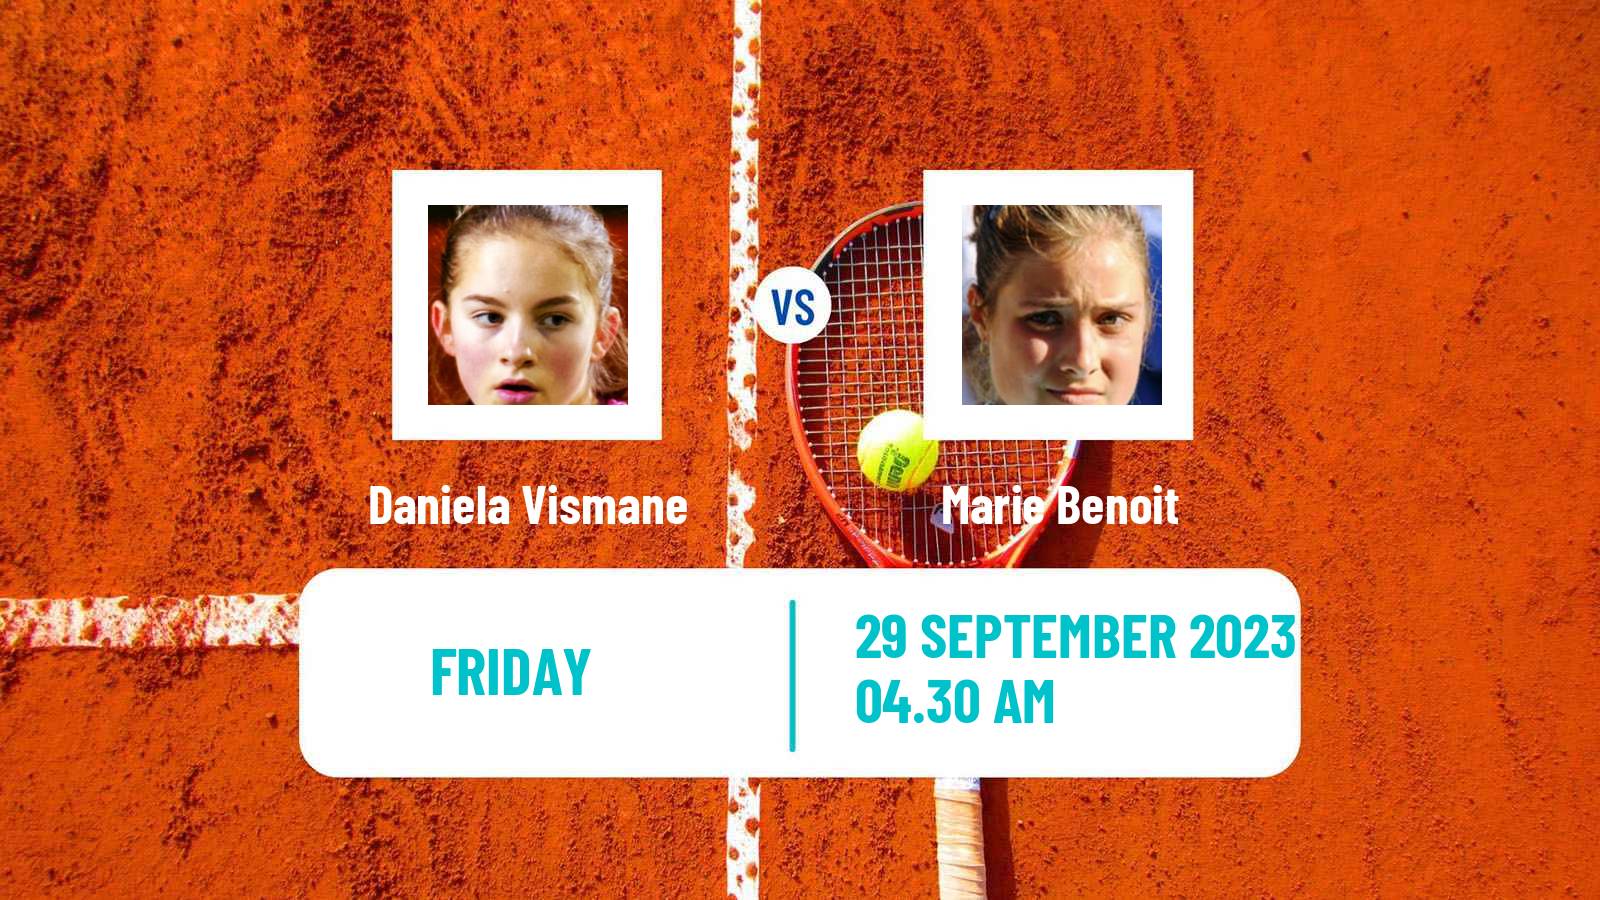 Tennis ITF W40 Kursumlijska Banja Women Daniela Vismane - Marie Benoit